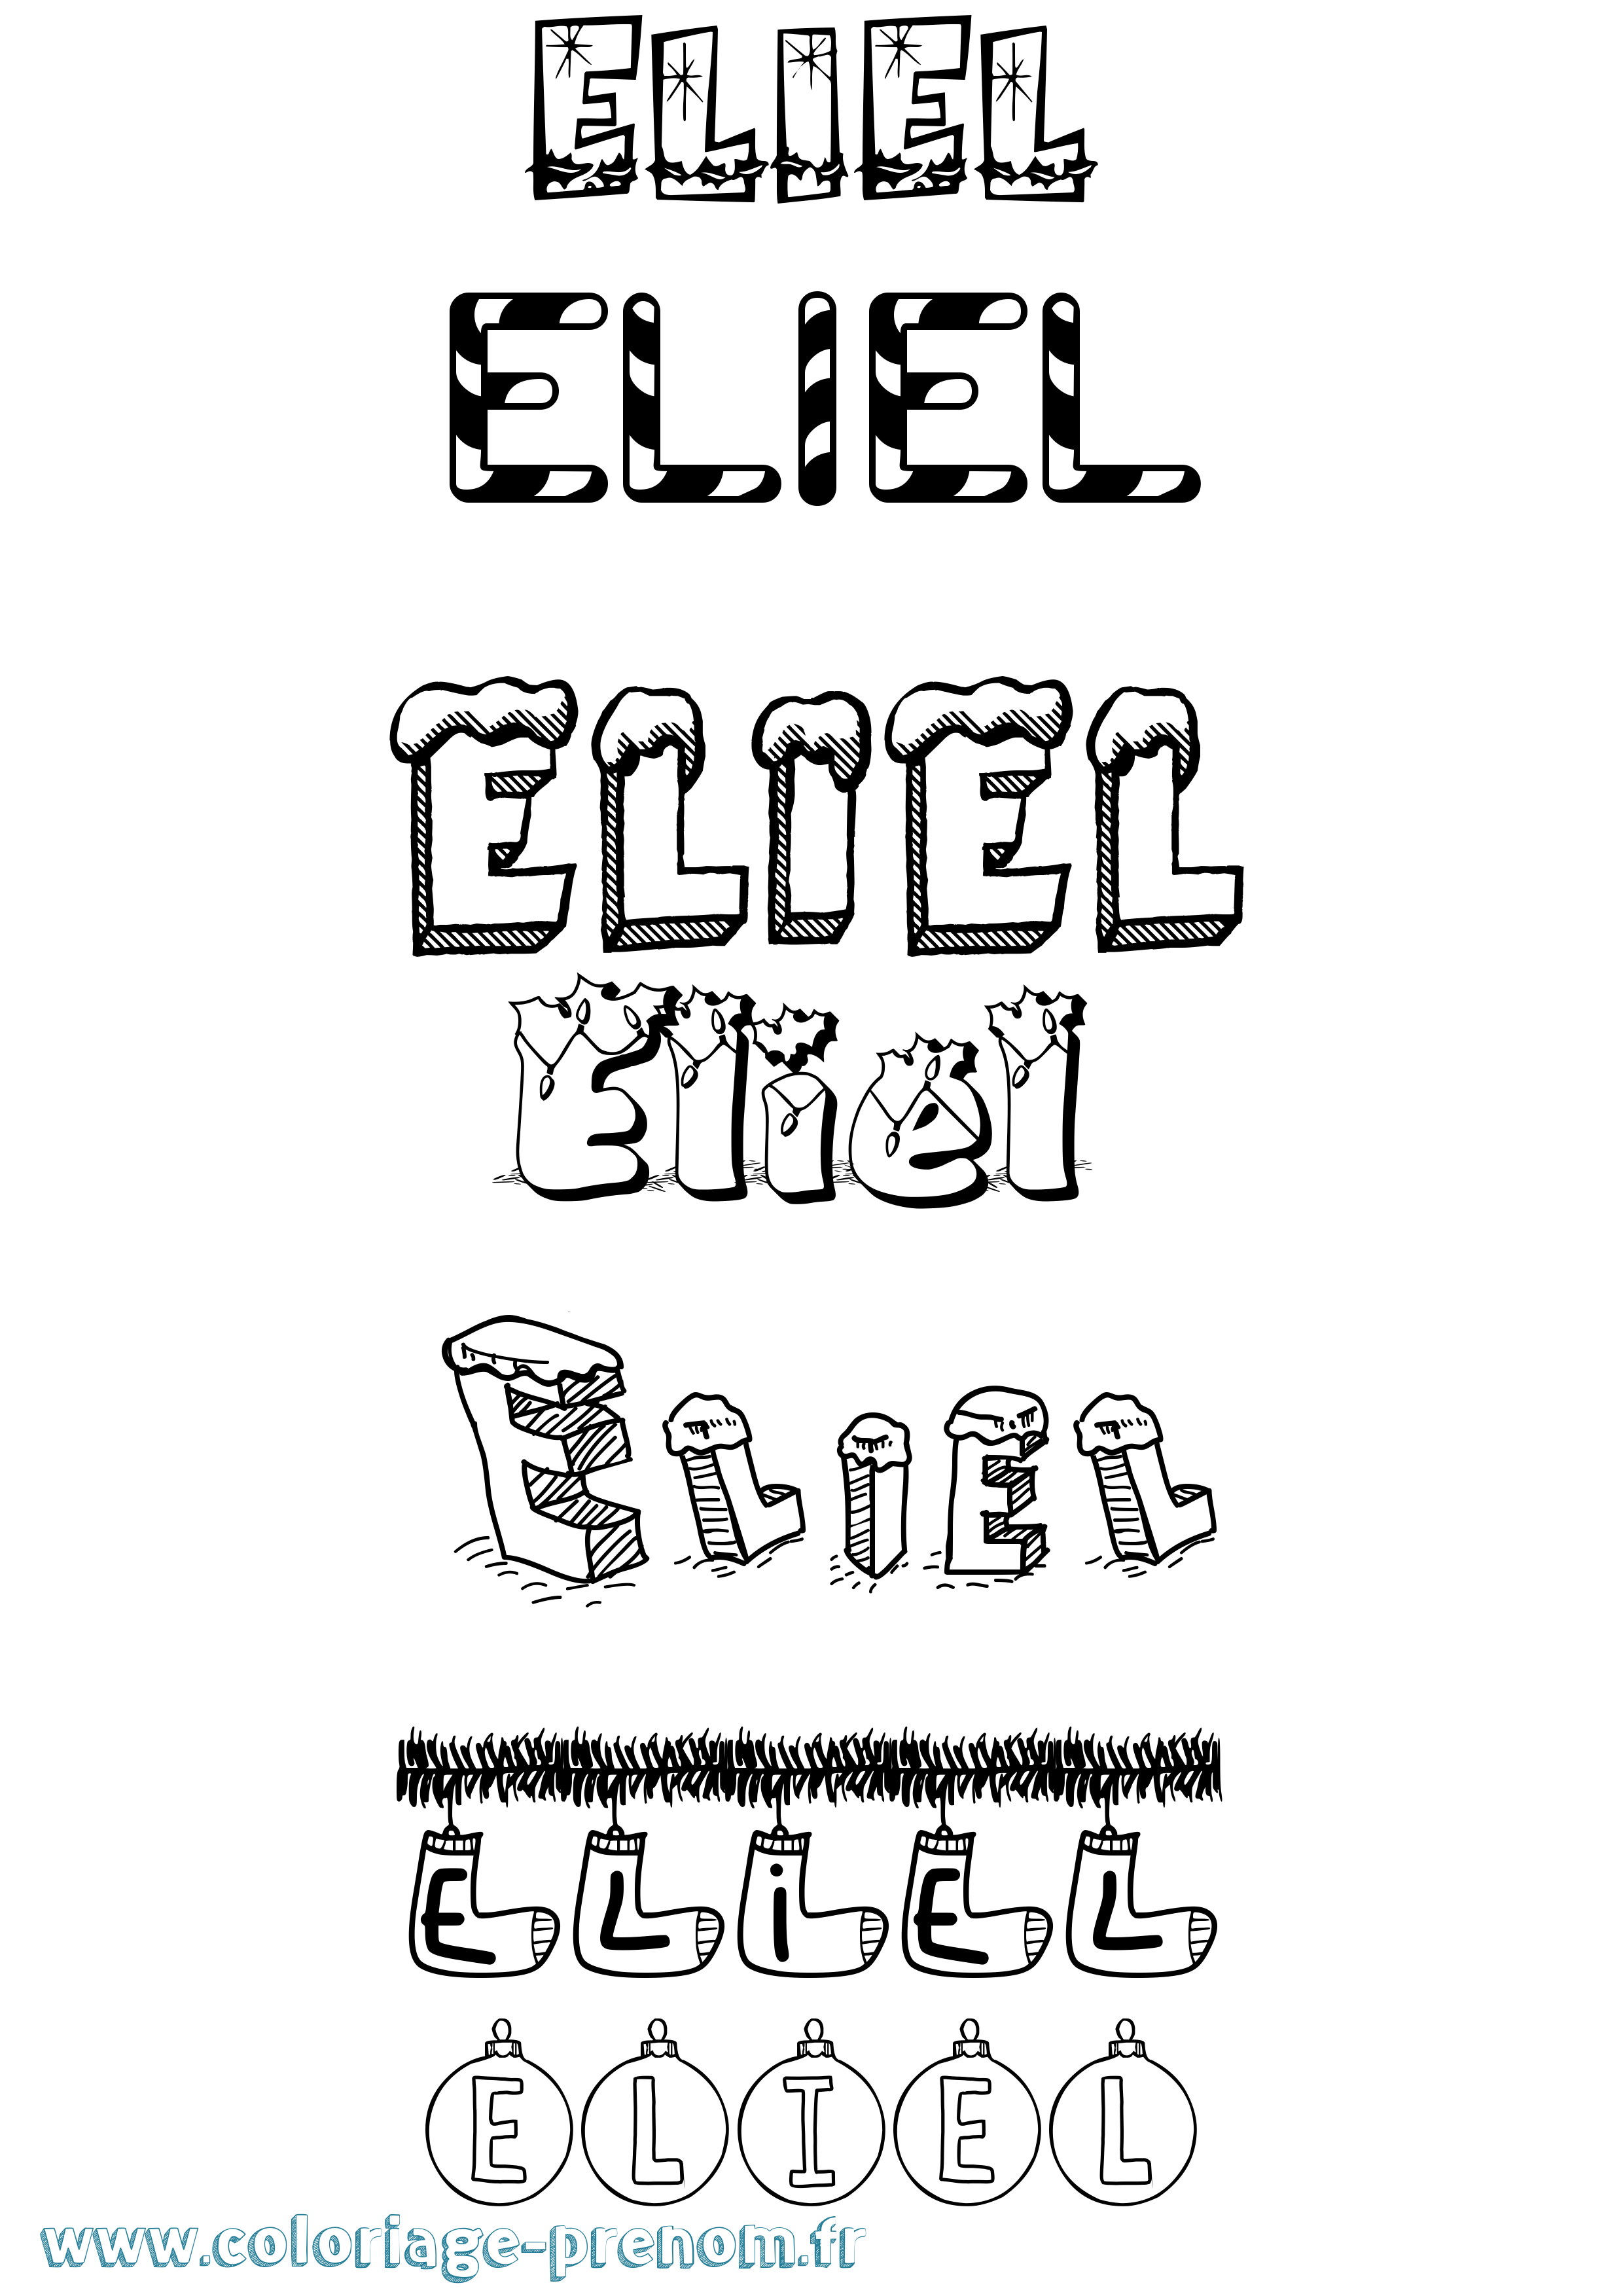 Coloriage prénom Eliel